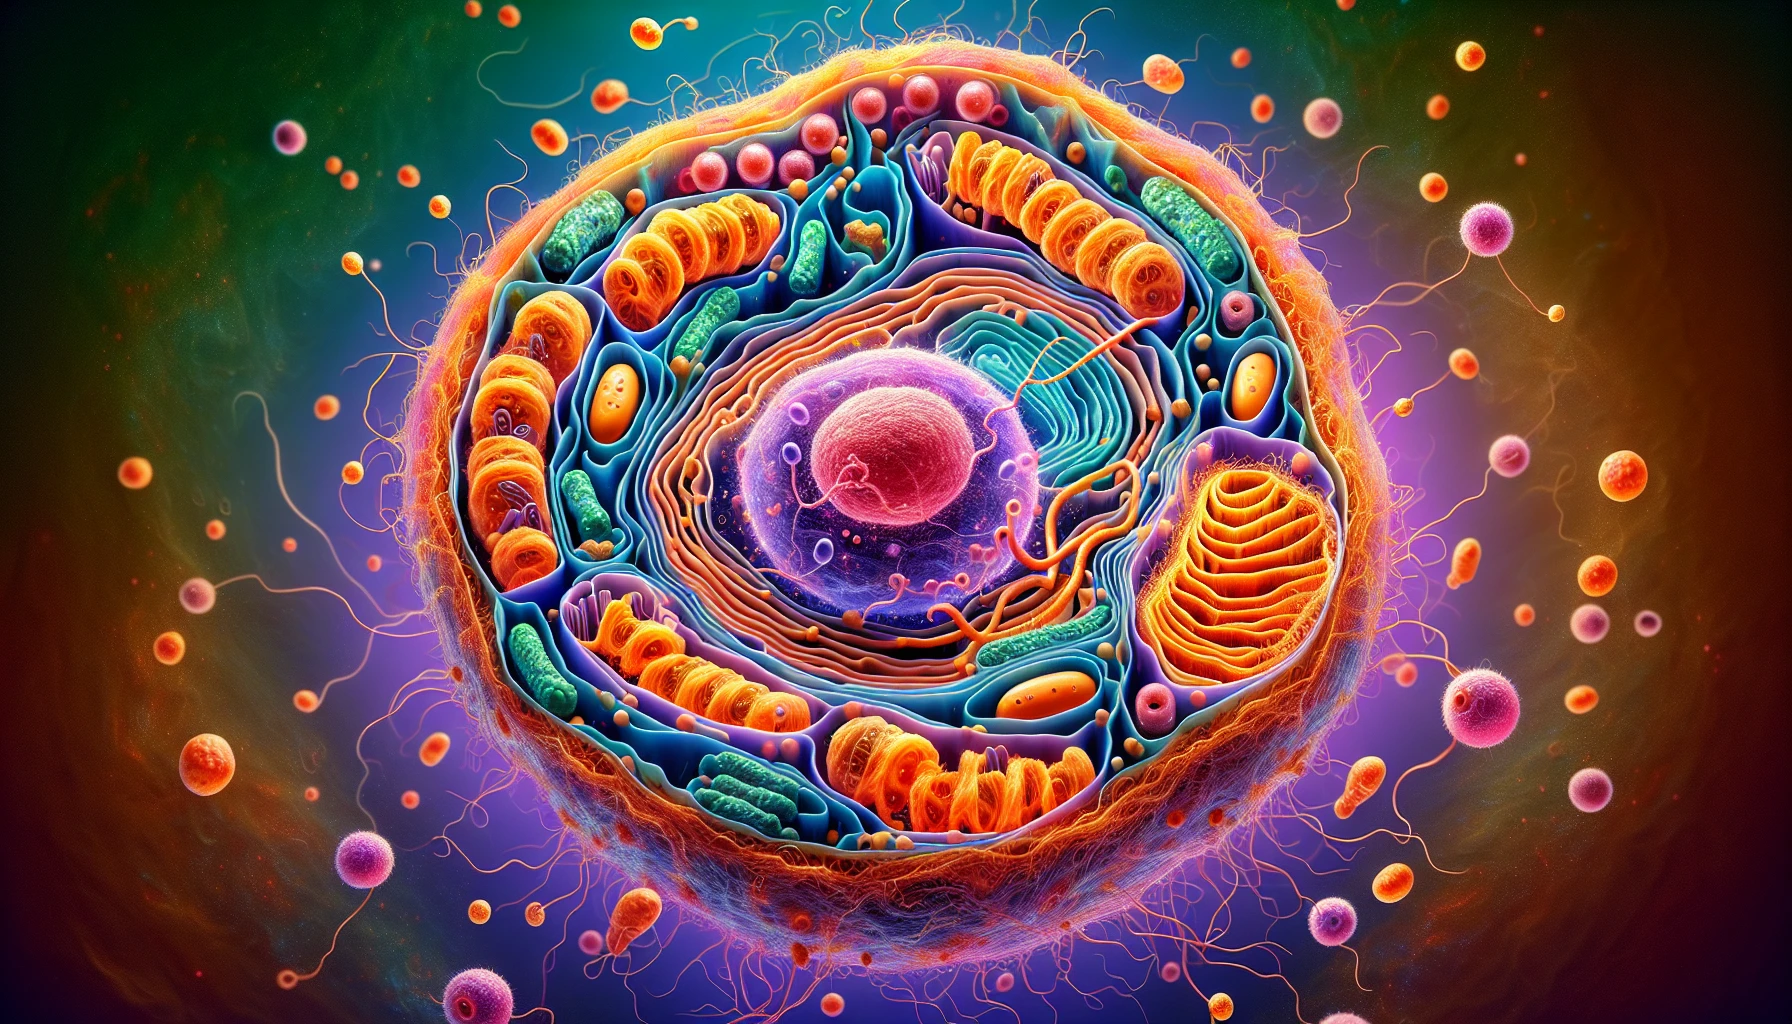 Illustration of cellular organization and metabolic processes